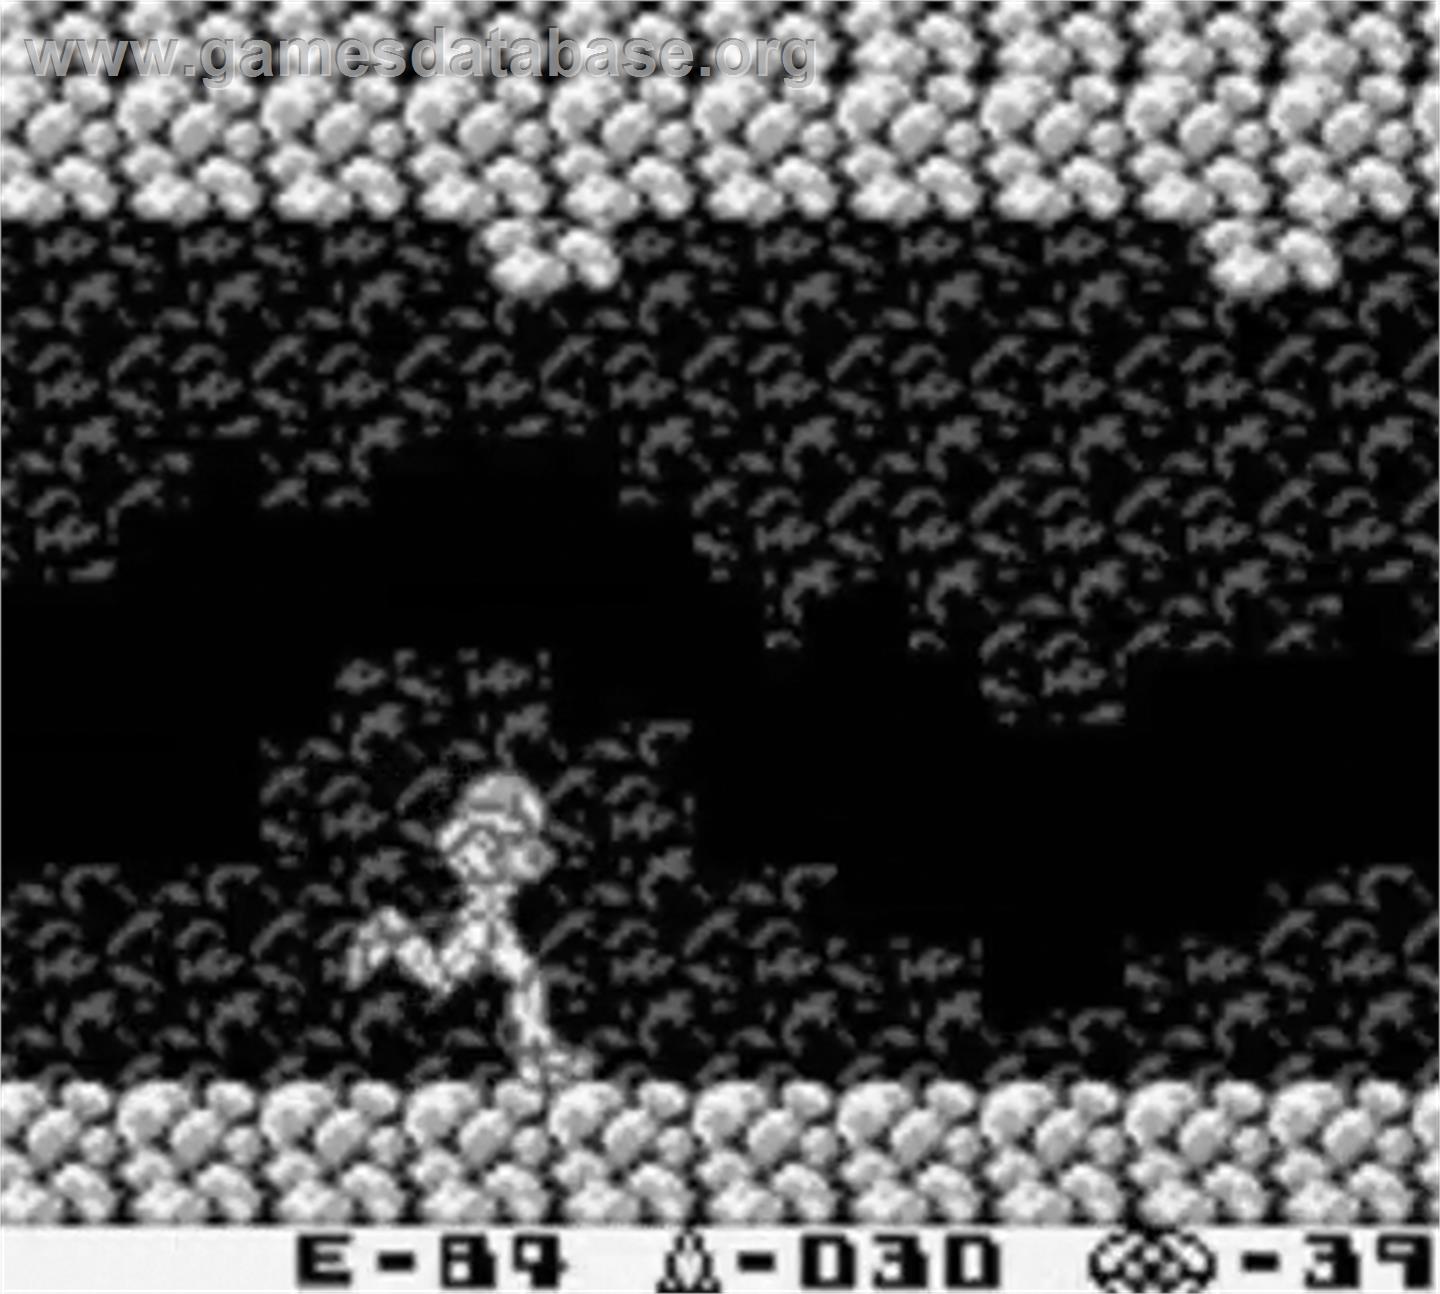 Metroid II - Return of Samus - Nintendo Game Boy - Artwork - In Game